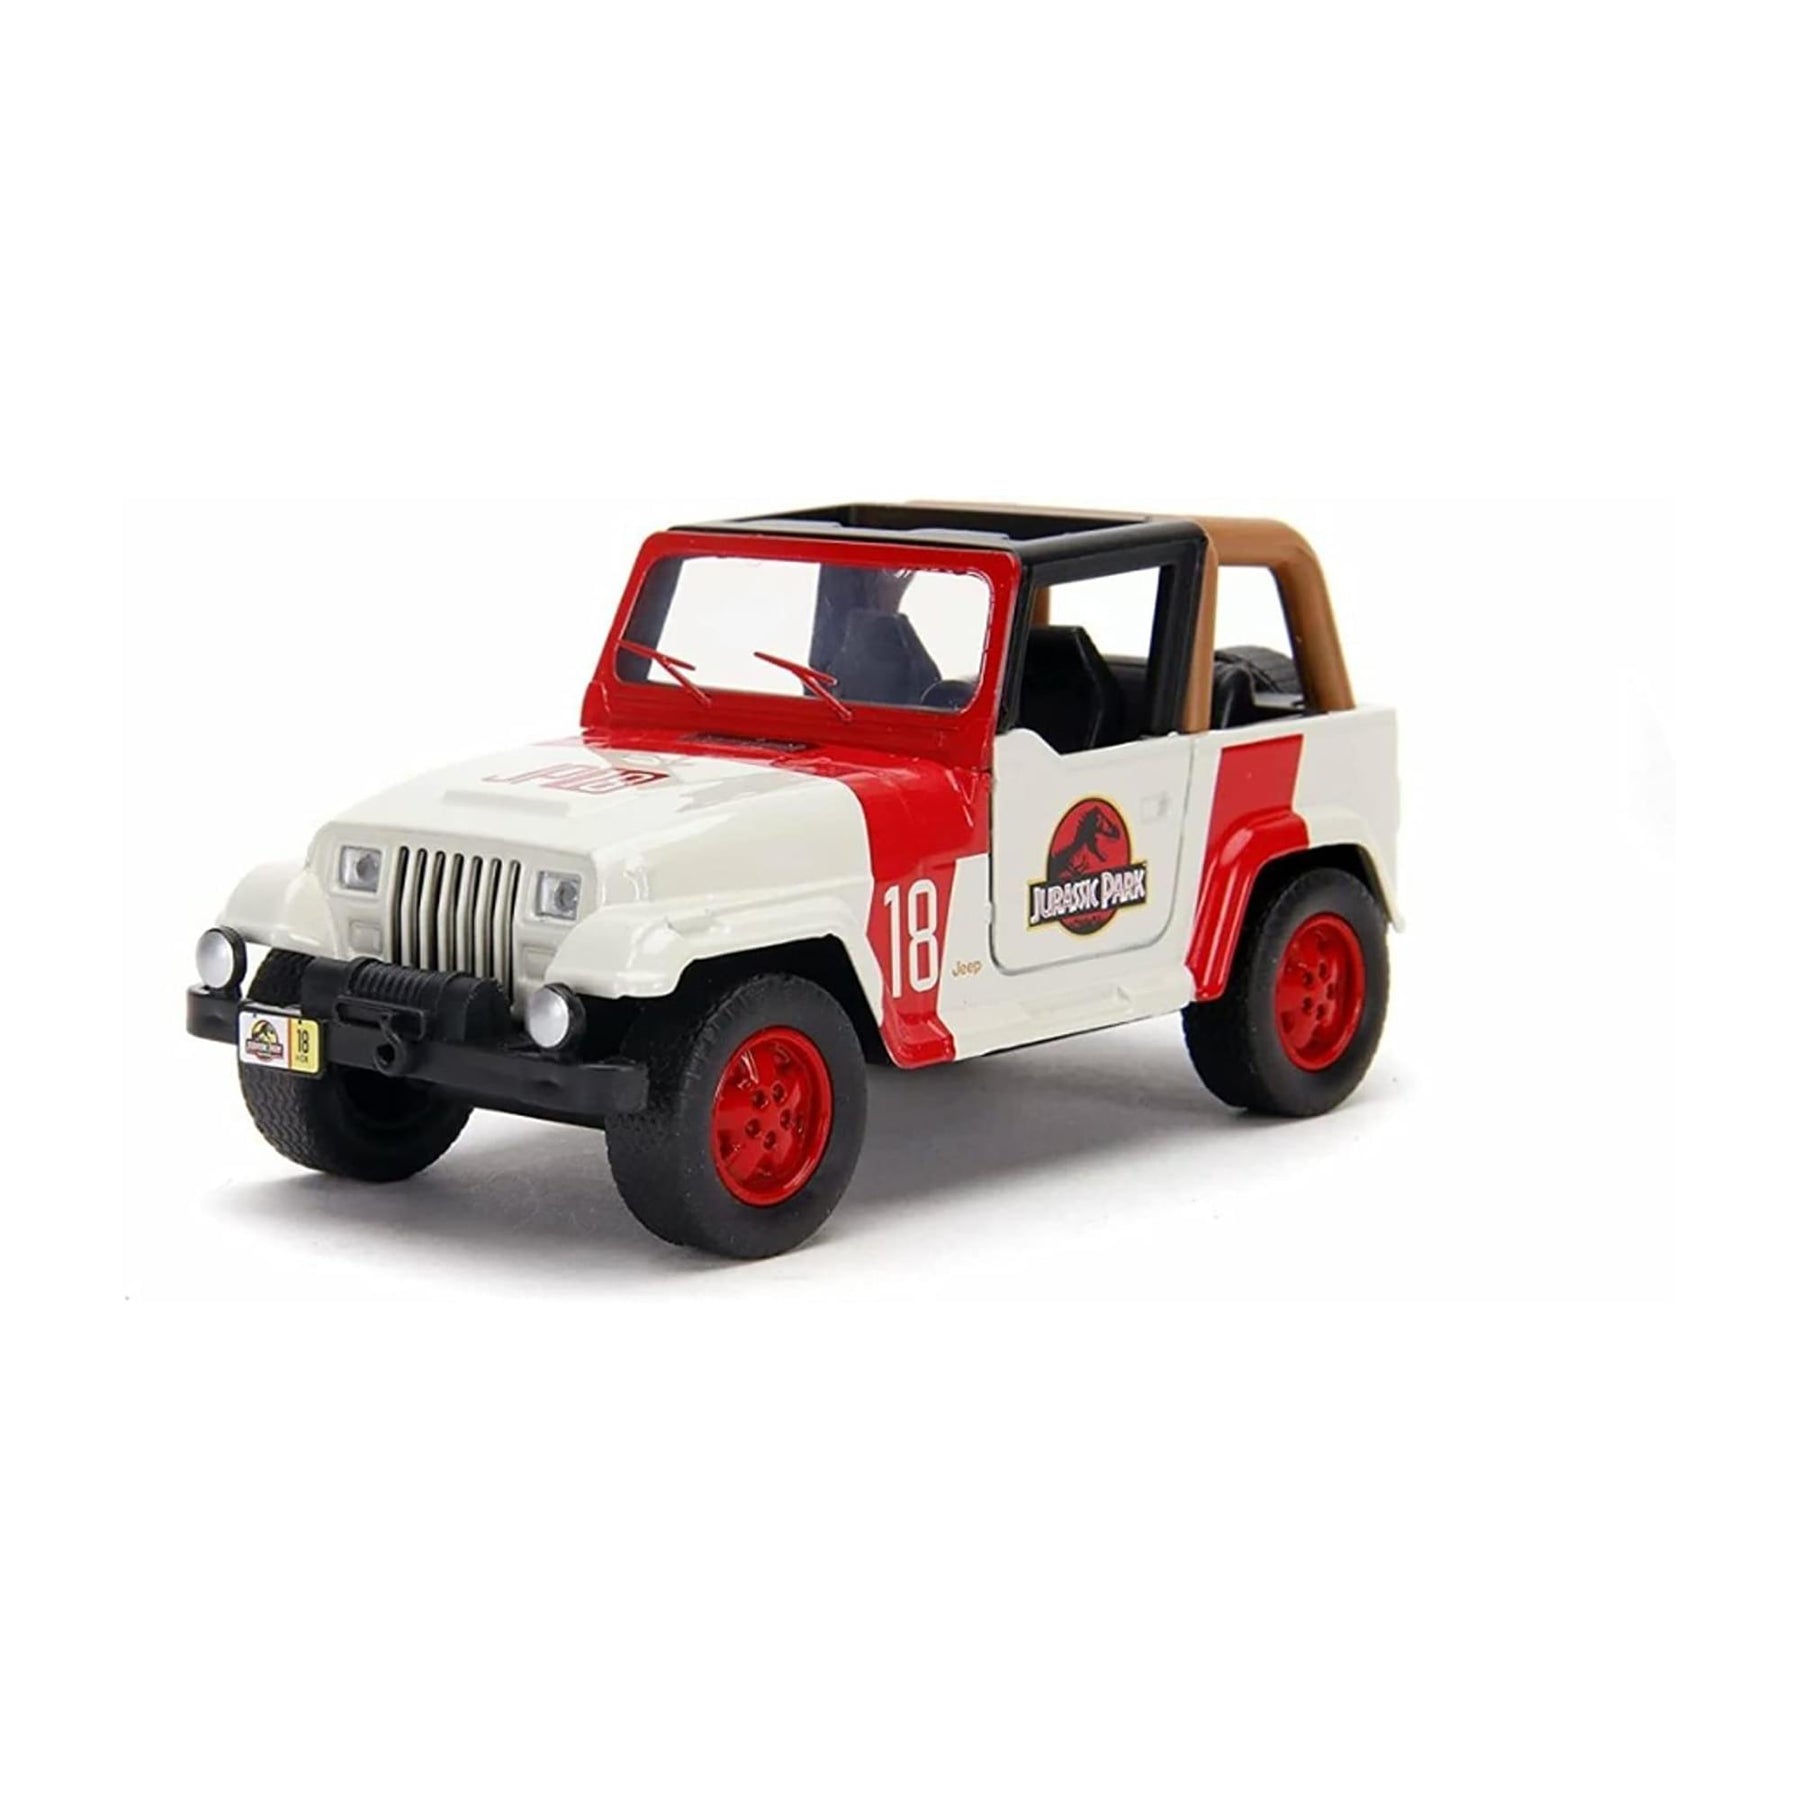 Jurassic World 1:32 92 Jeep Wrangler Diecast Car | Free Shipping